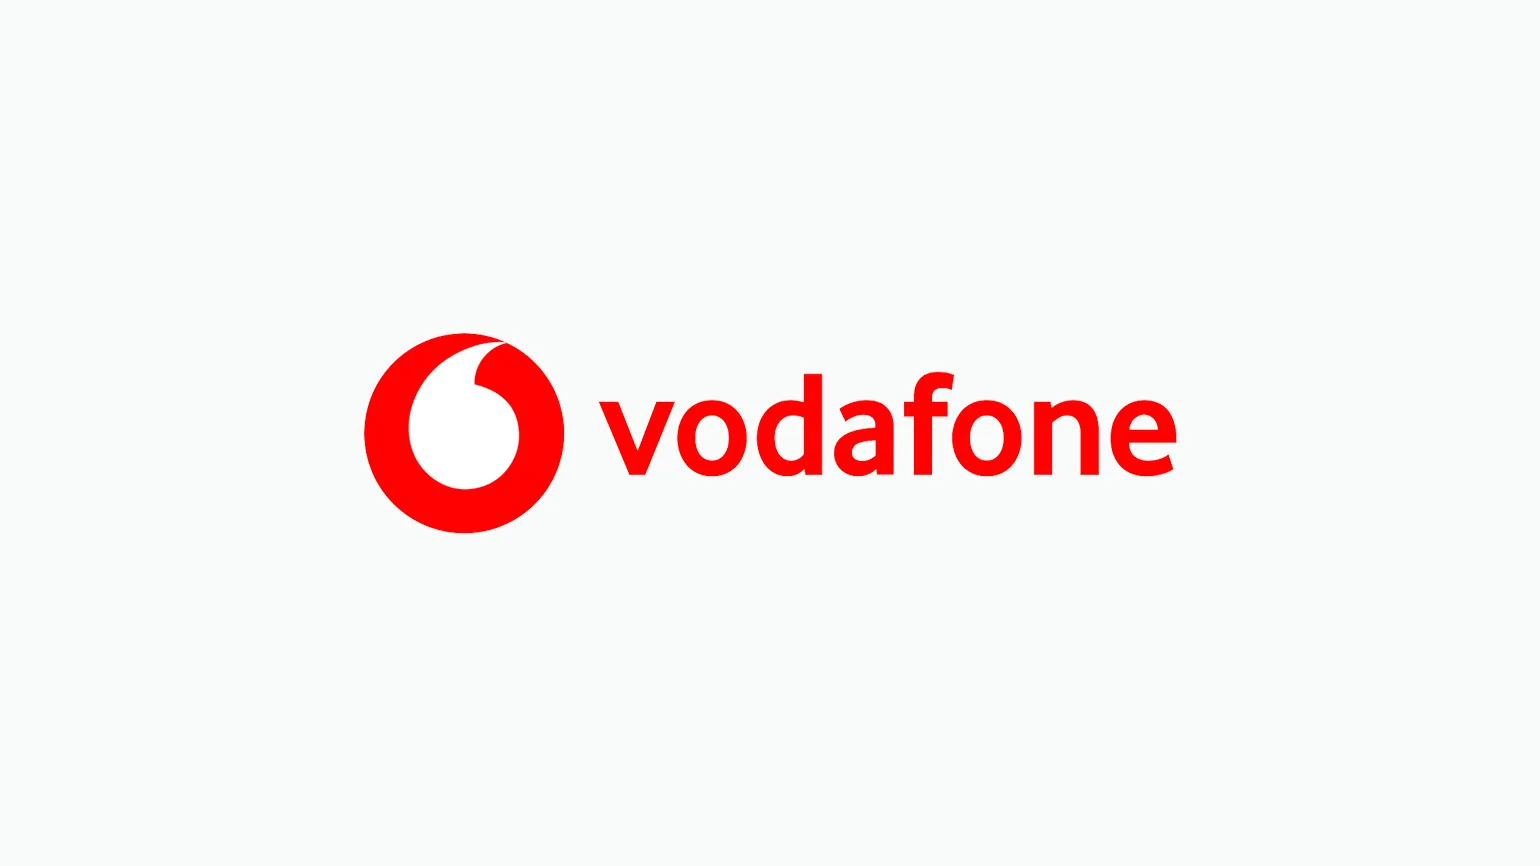 Vodafone international roaming